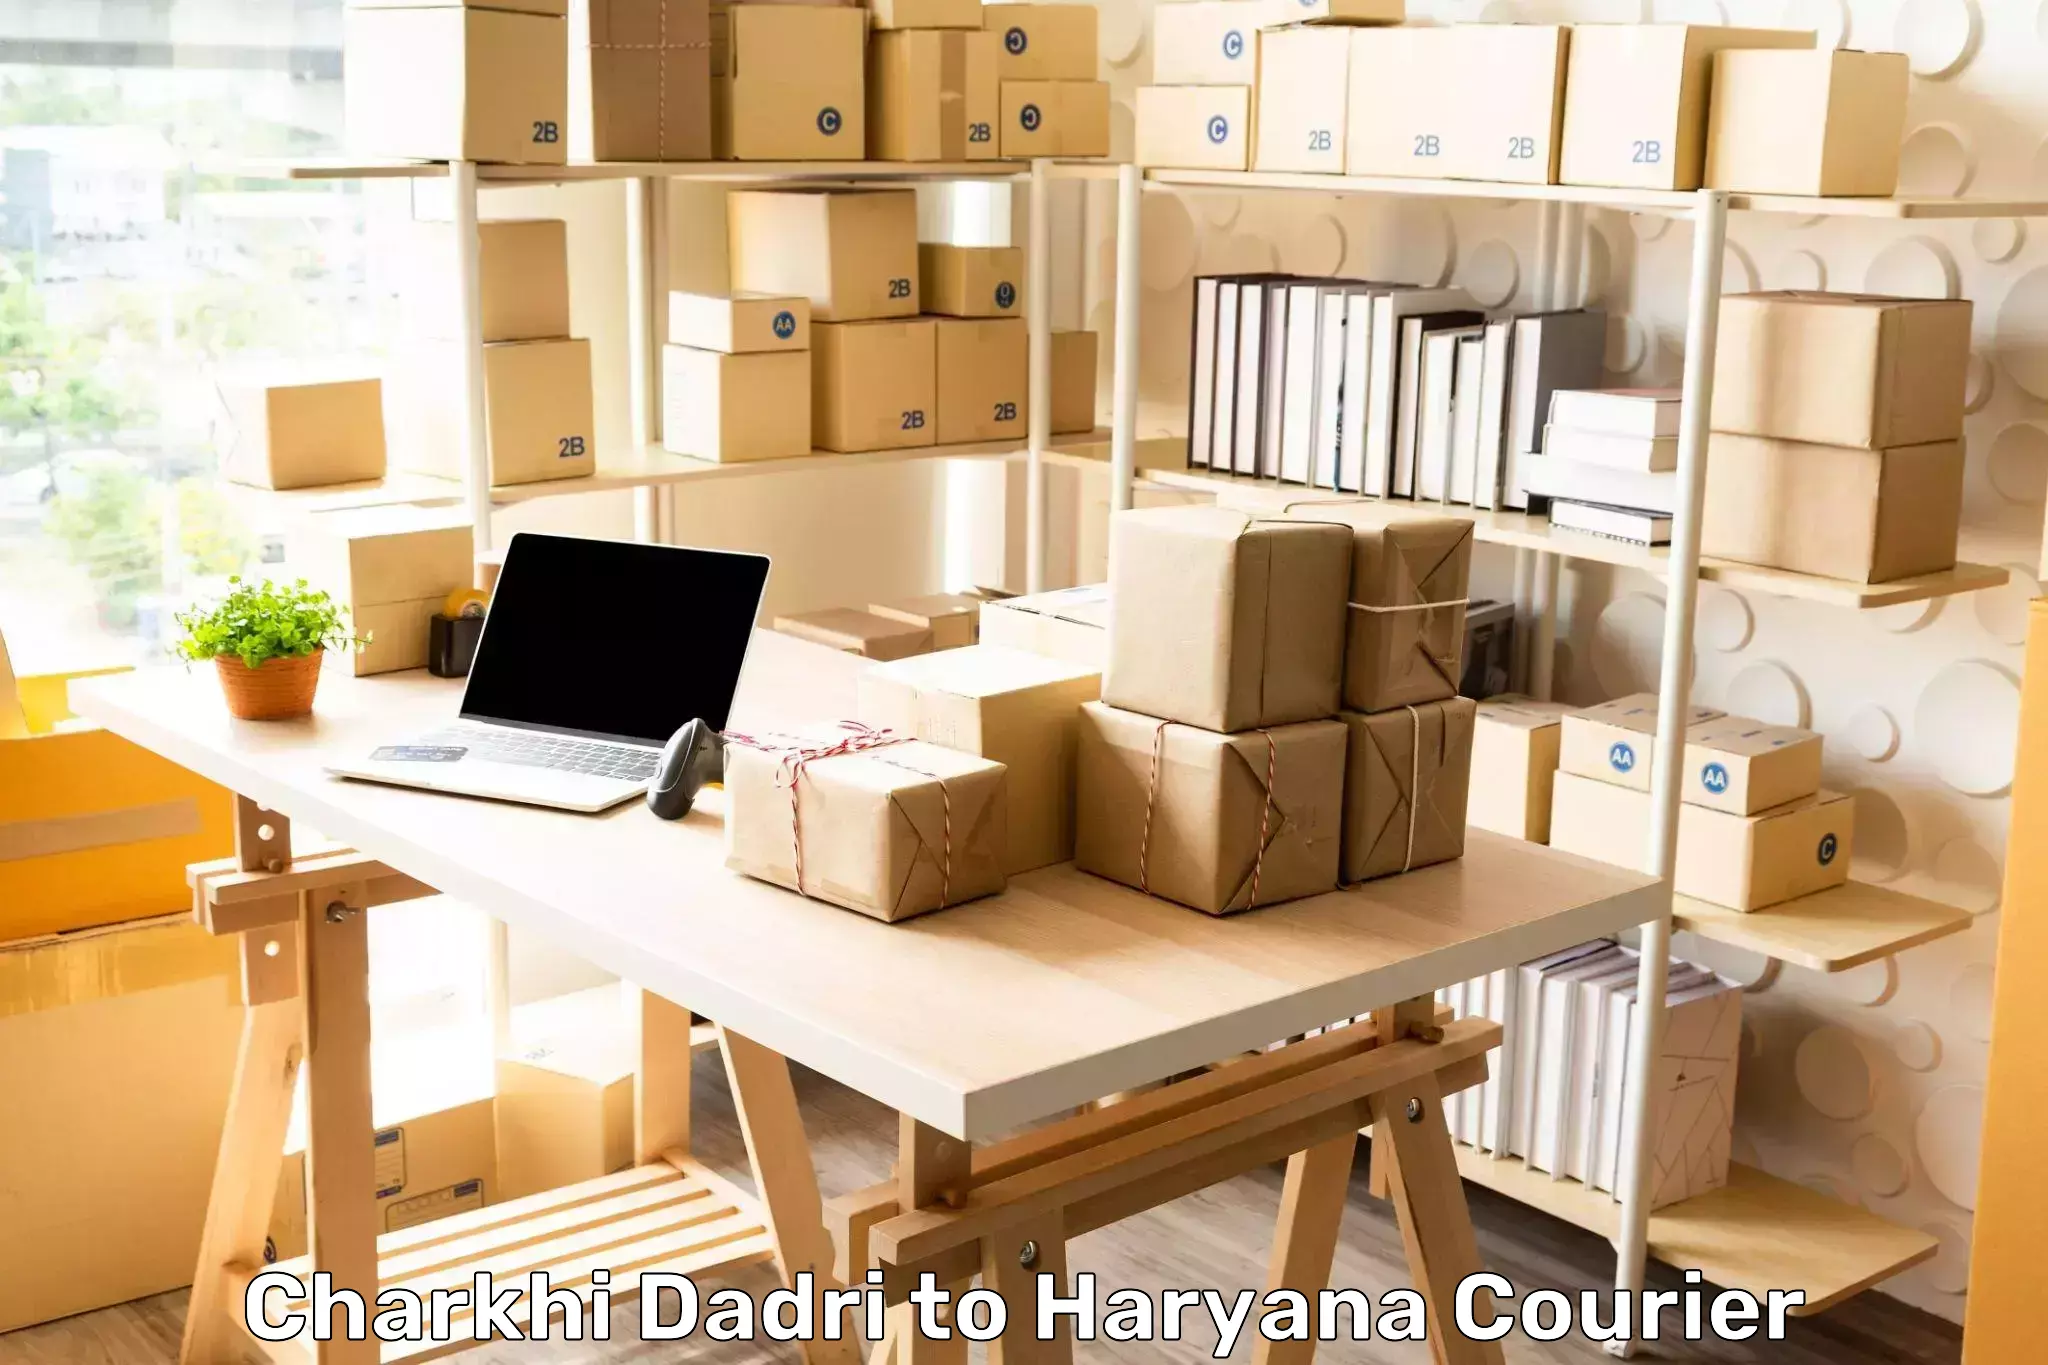 Courier service efficiency Charkhi Dadri to Ratia